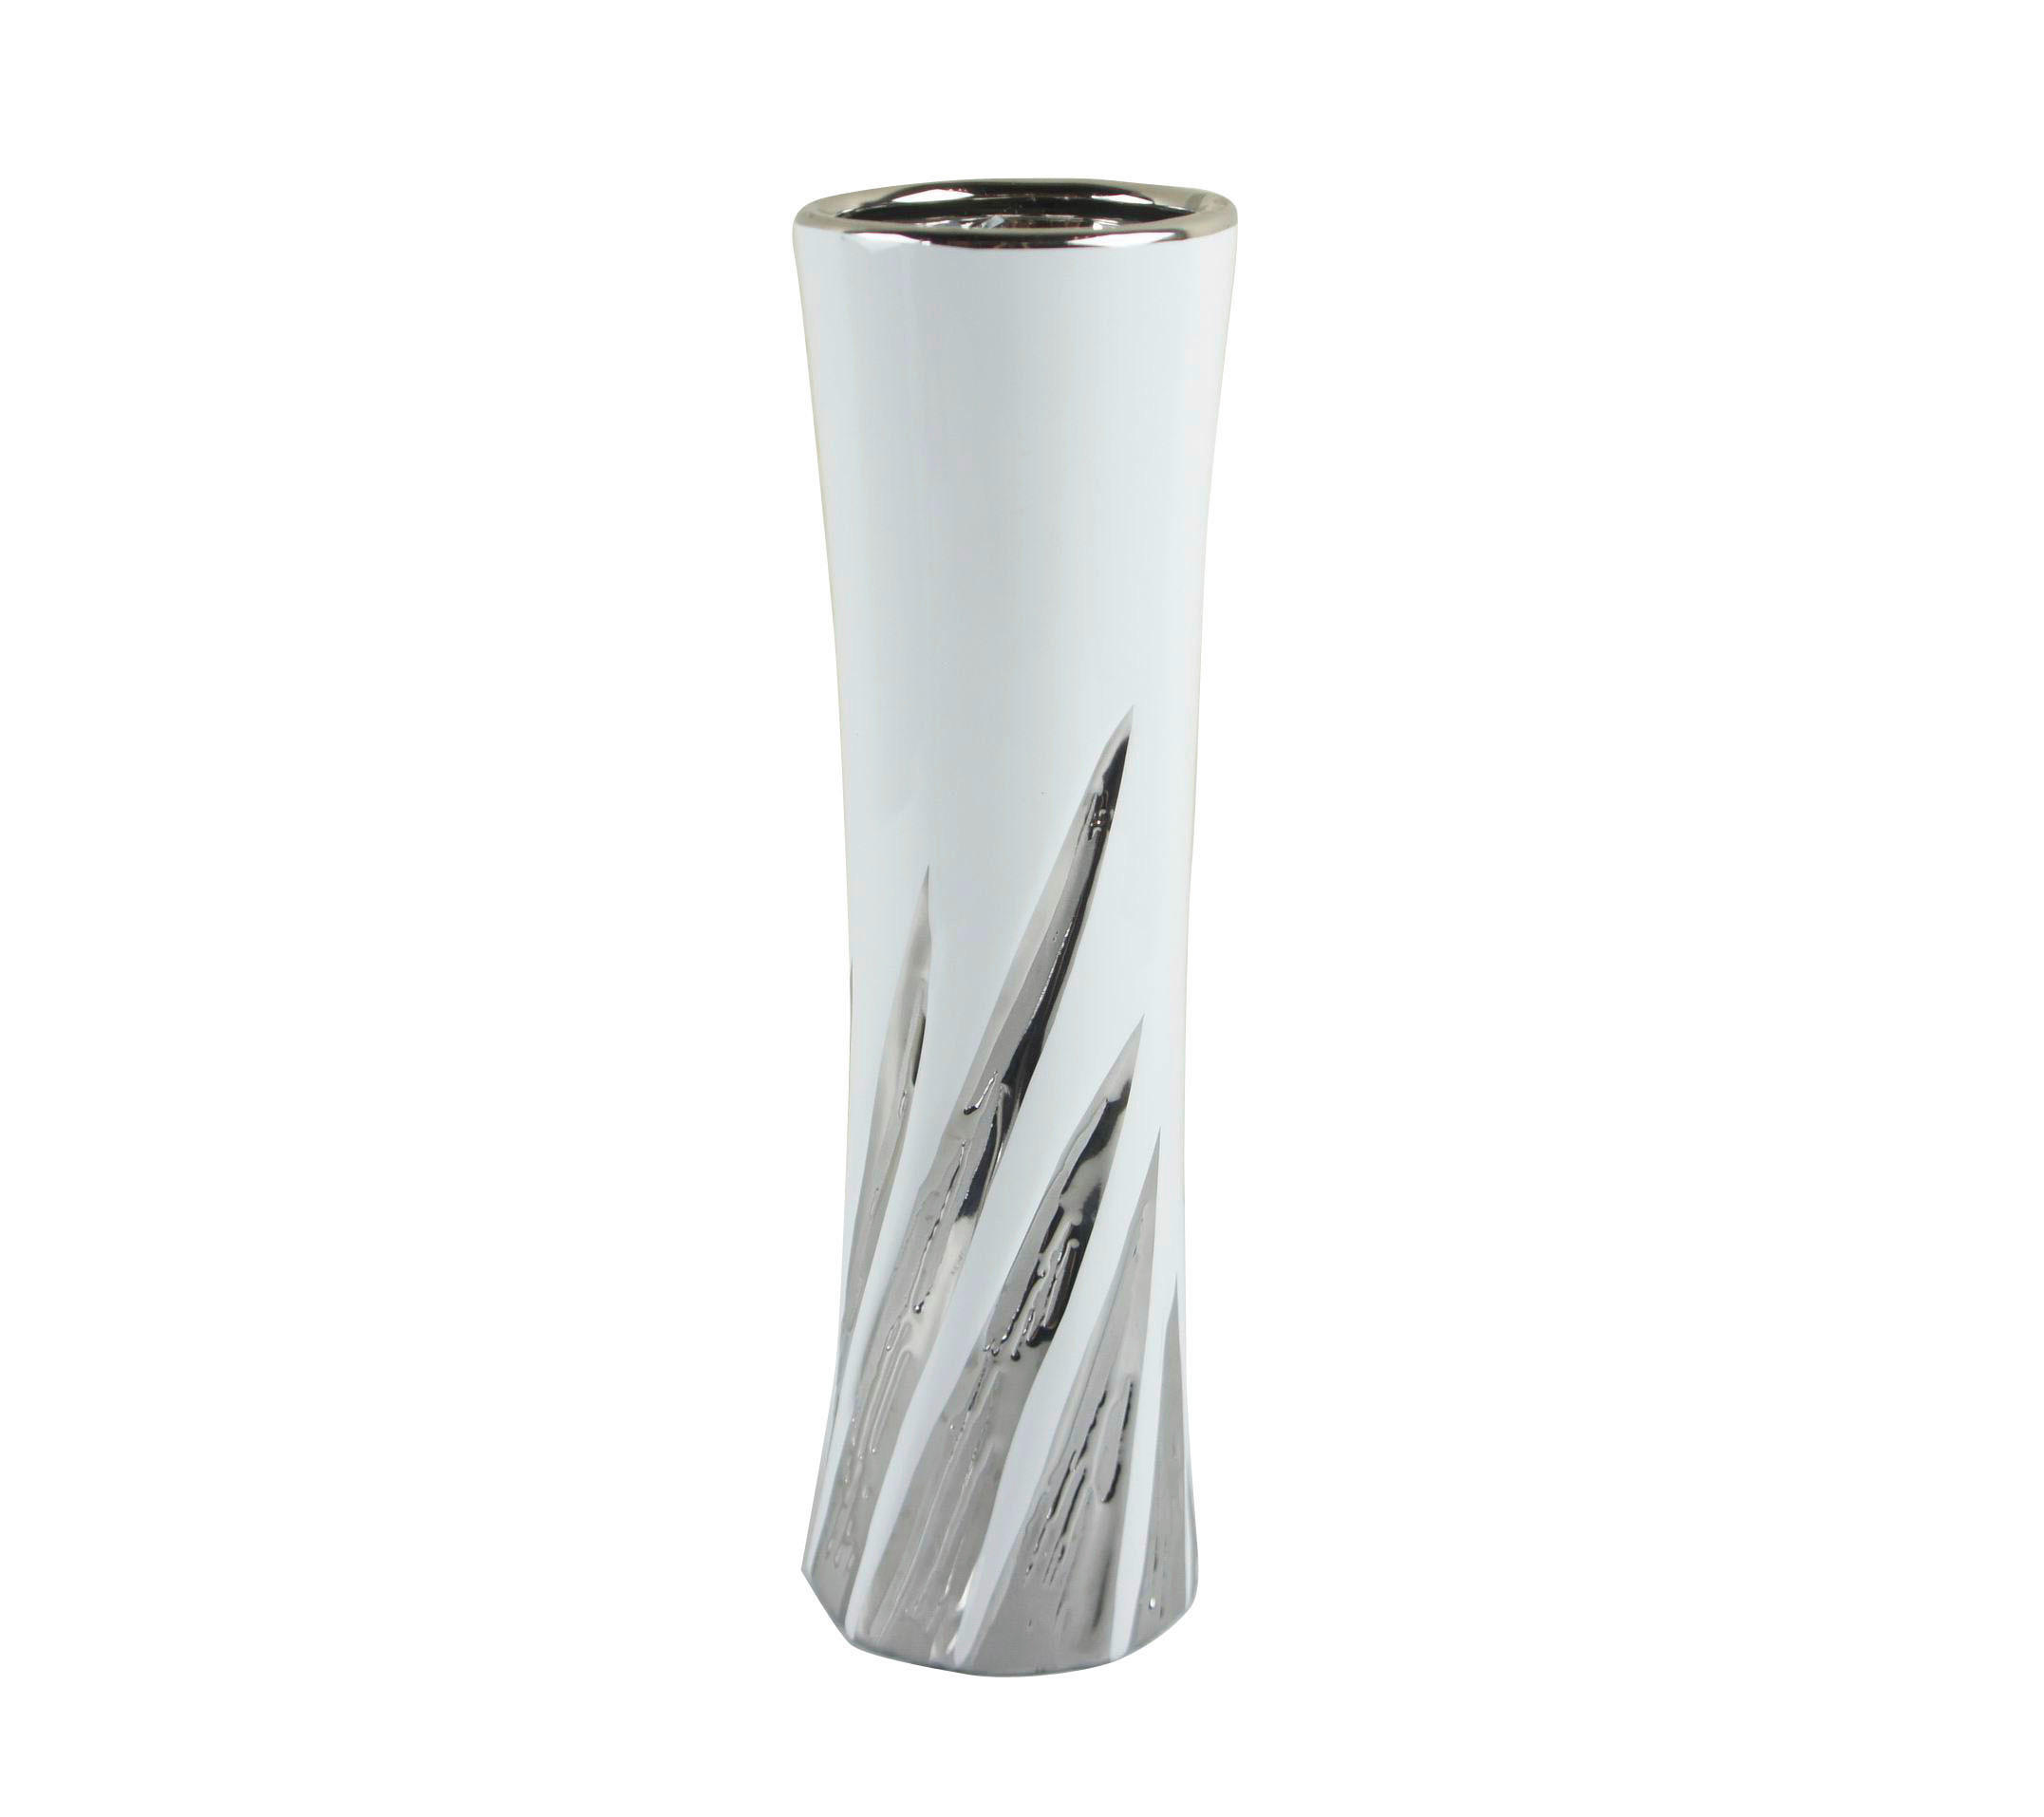 Ambia Home VÁZA, keramika, 29,5 cm - barvy stříbra,bílá